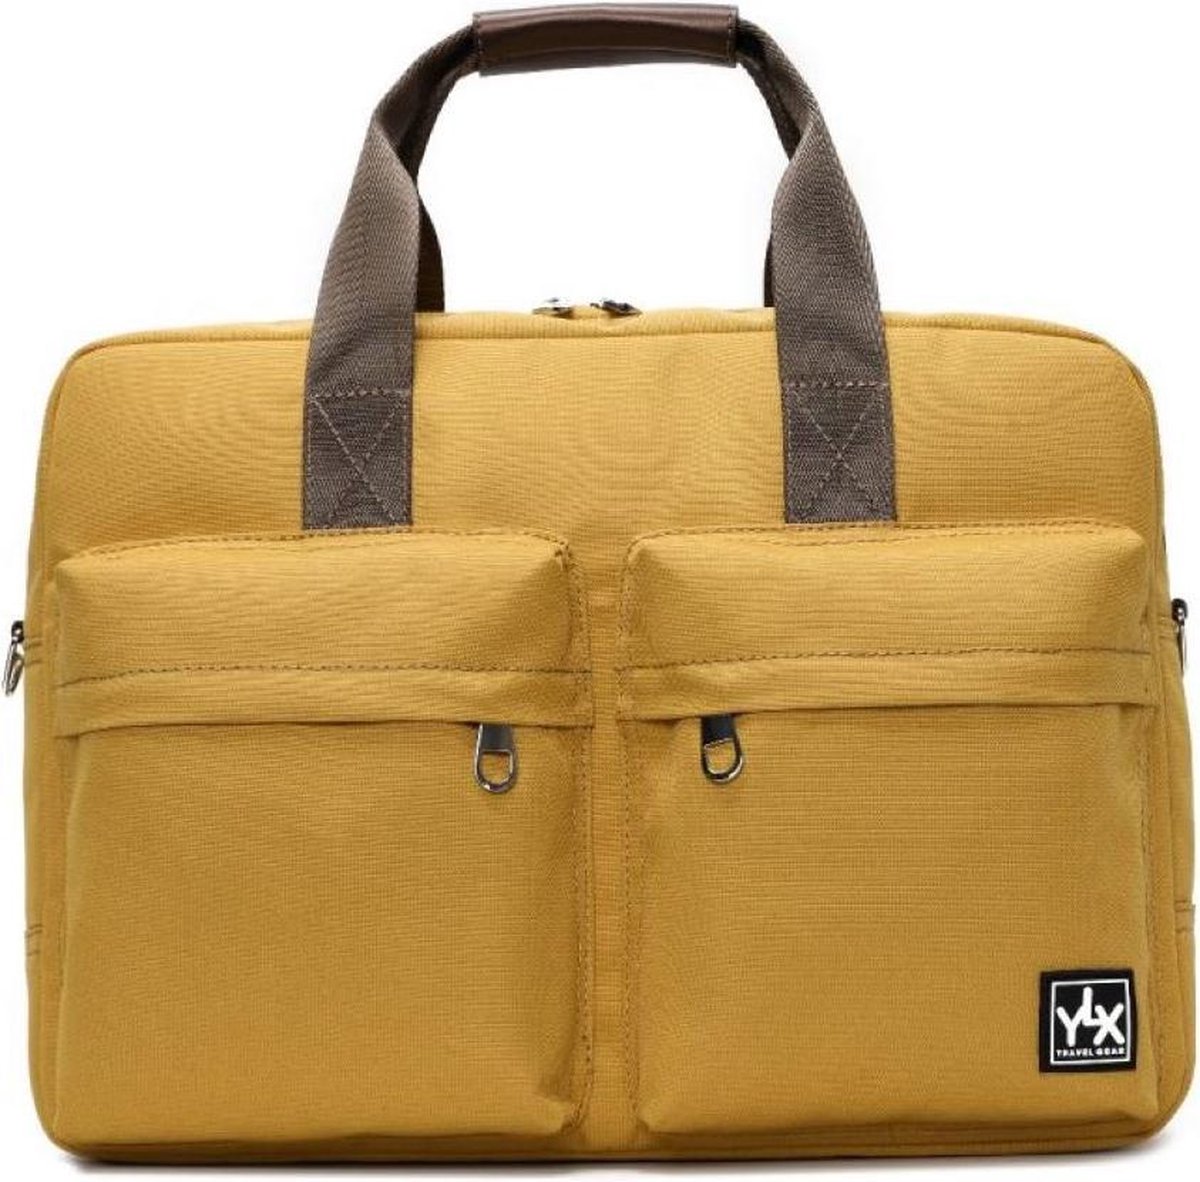 YLX Nash Laptop bag. Oker geel. Recycled Rpet materiaal. Gerecyclede plastic flessen. Eco-friendly. 15